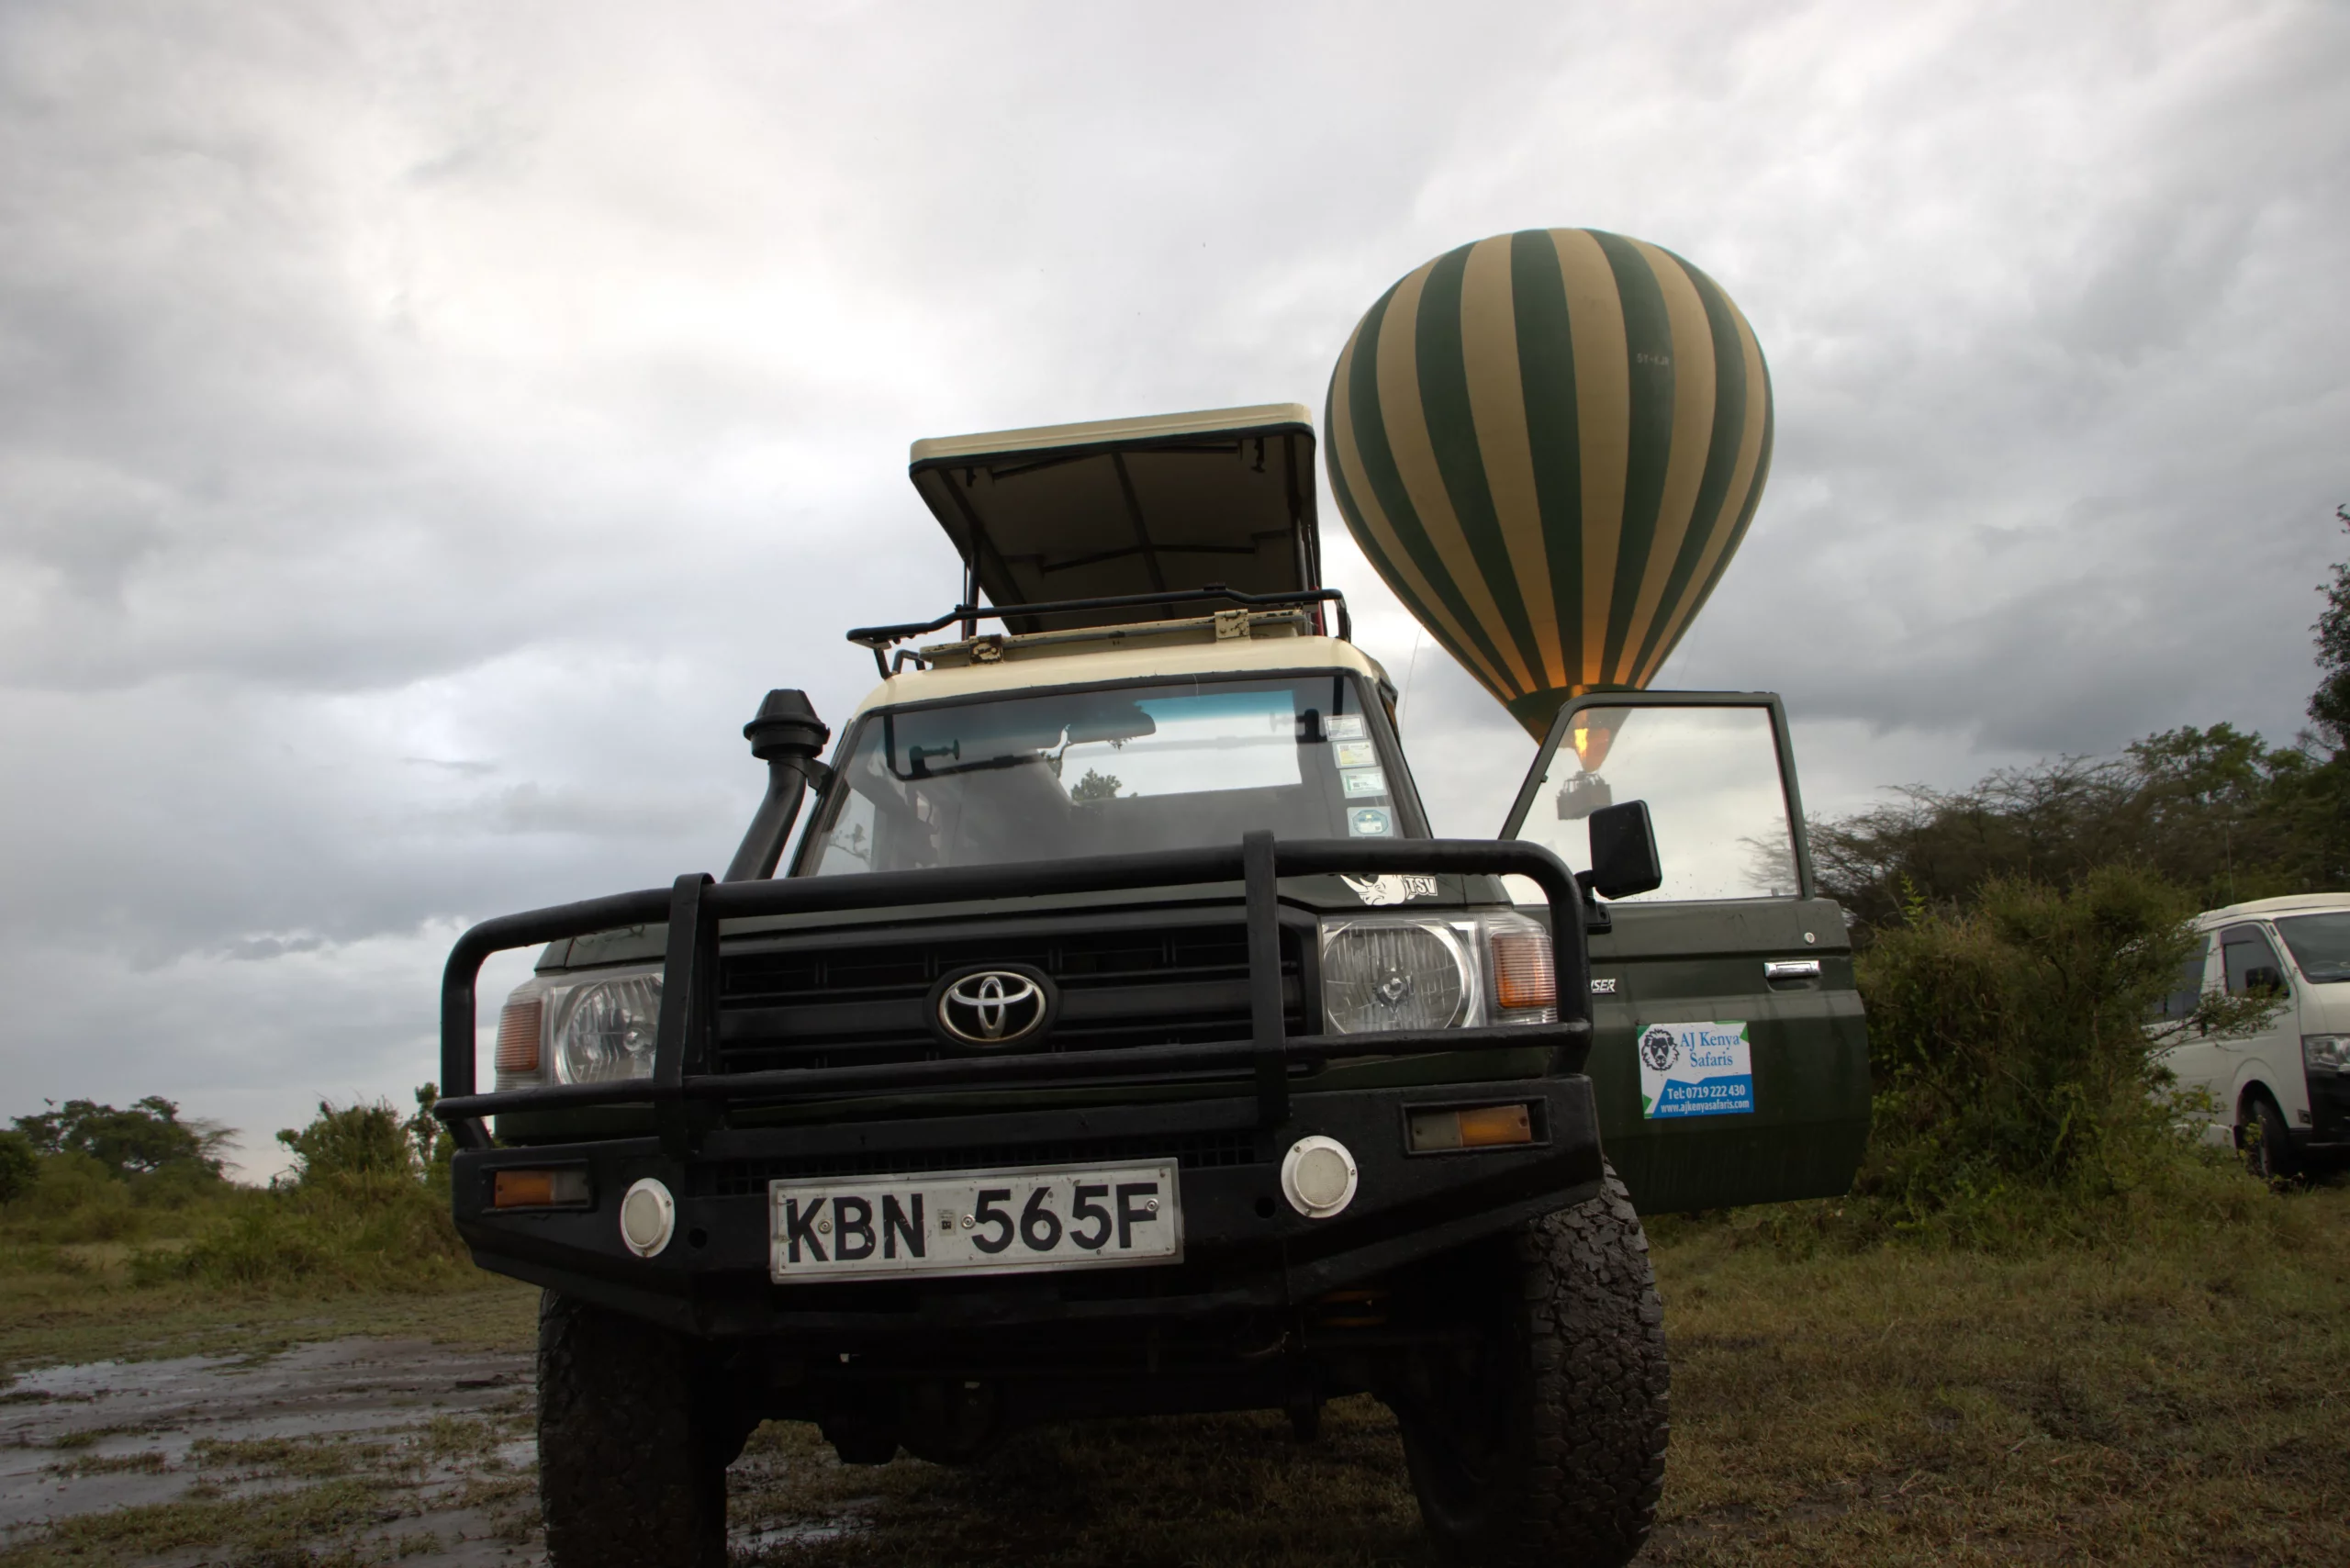 Hot air balloon at Masai Mara